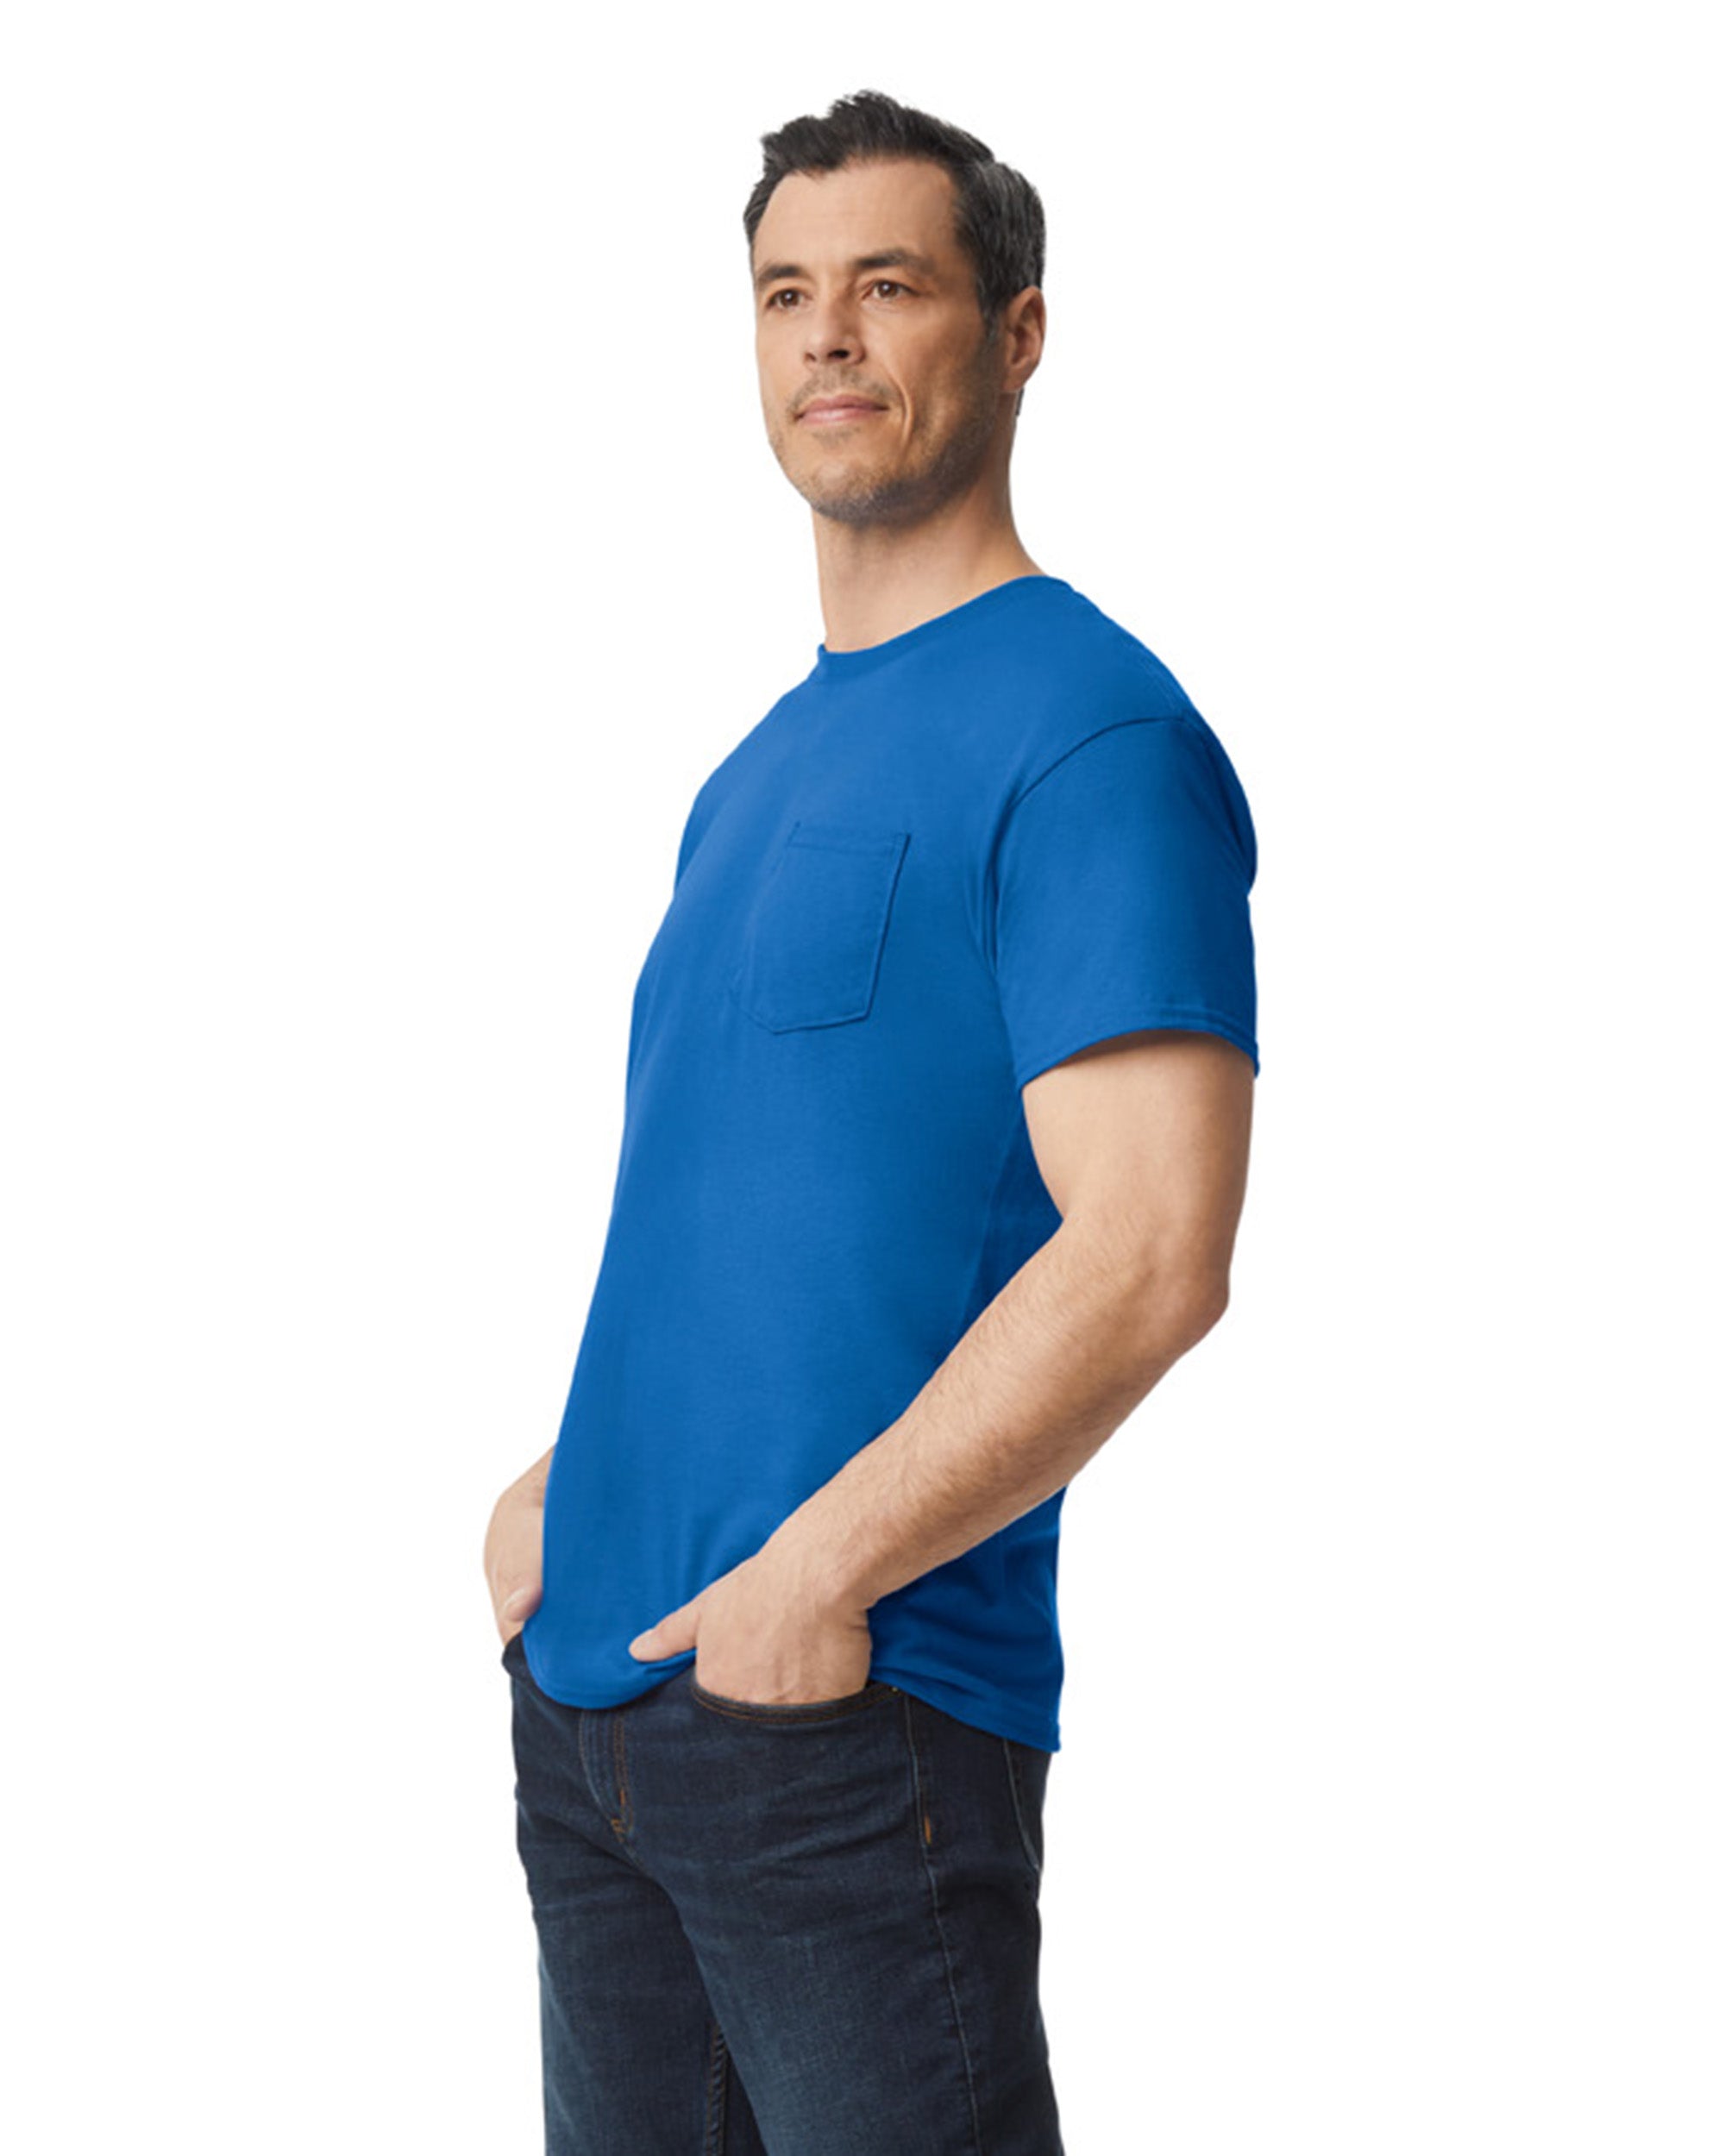 Adult Unisex 5.5 oz., 50/50 Pocket T-Shirt